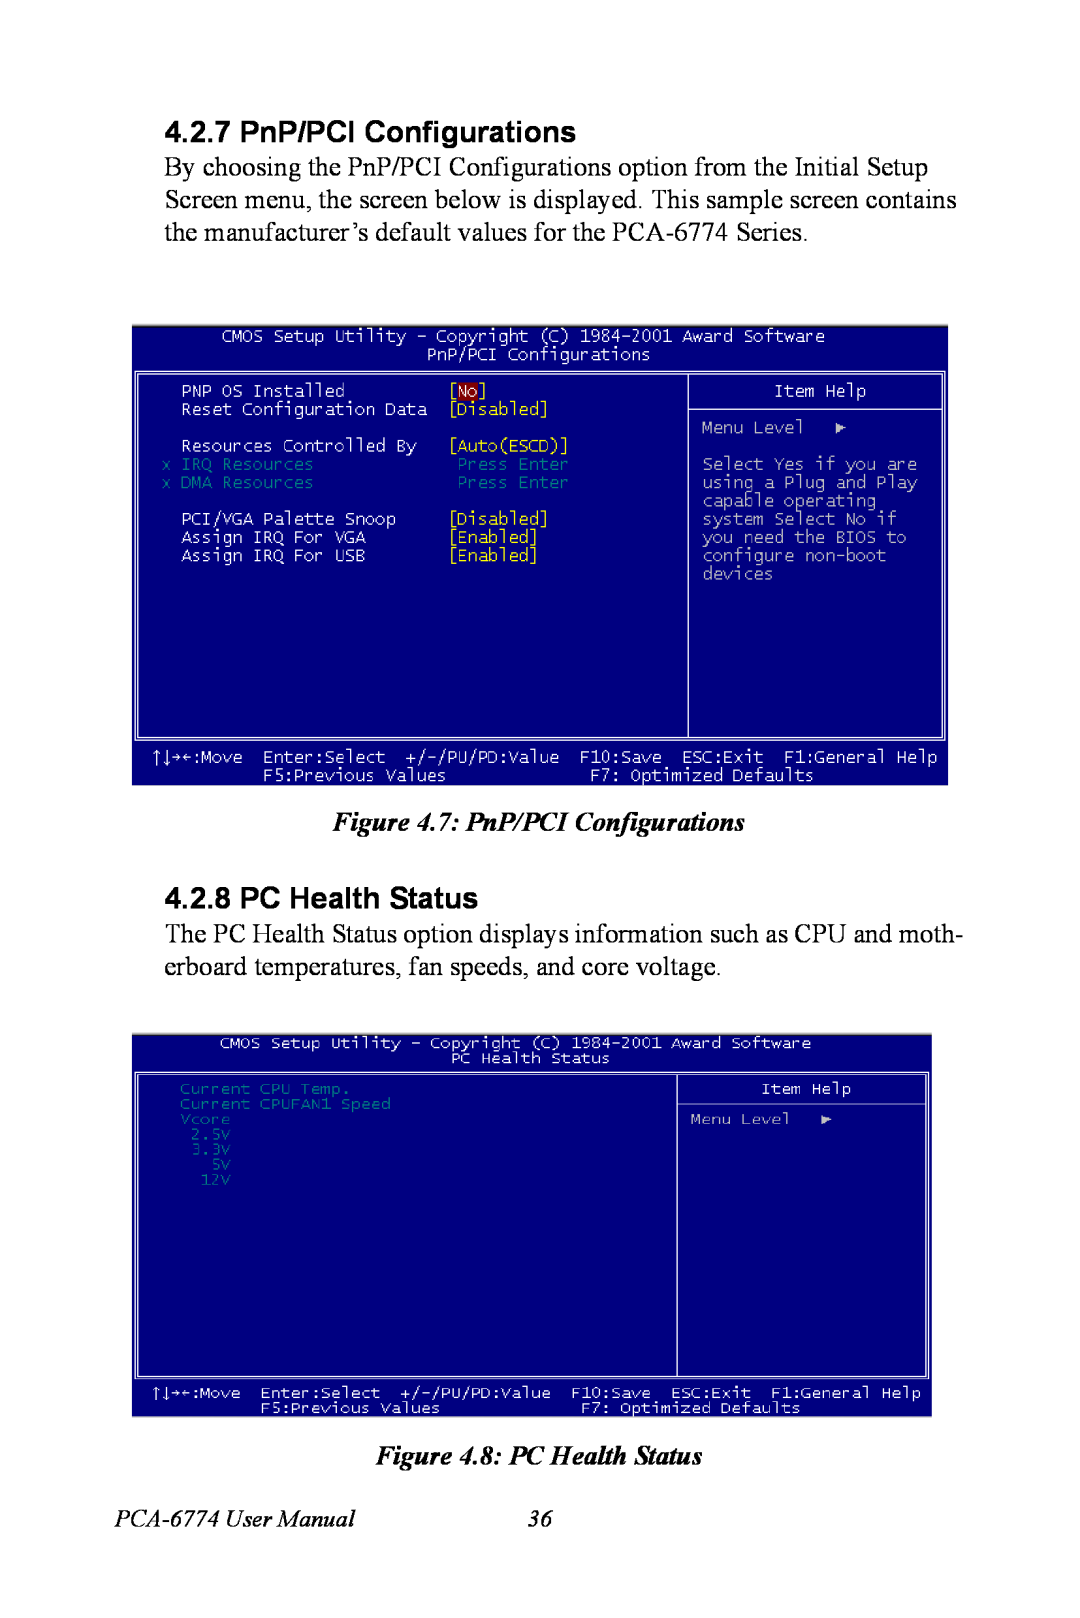 Advantech PCA-6774 user manual 4.2.7 PnP/PCI Configurations, 8 PC Health Status 